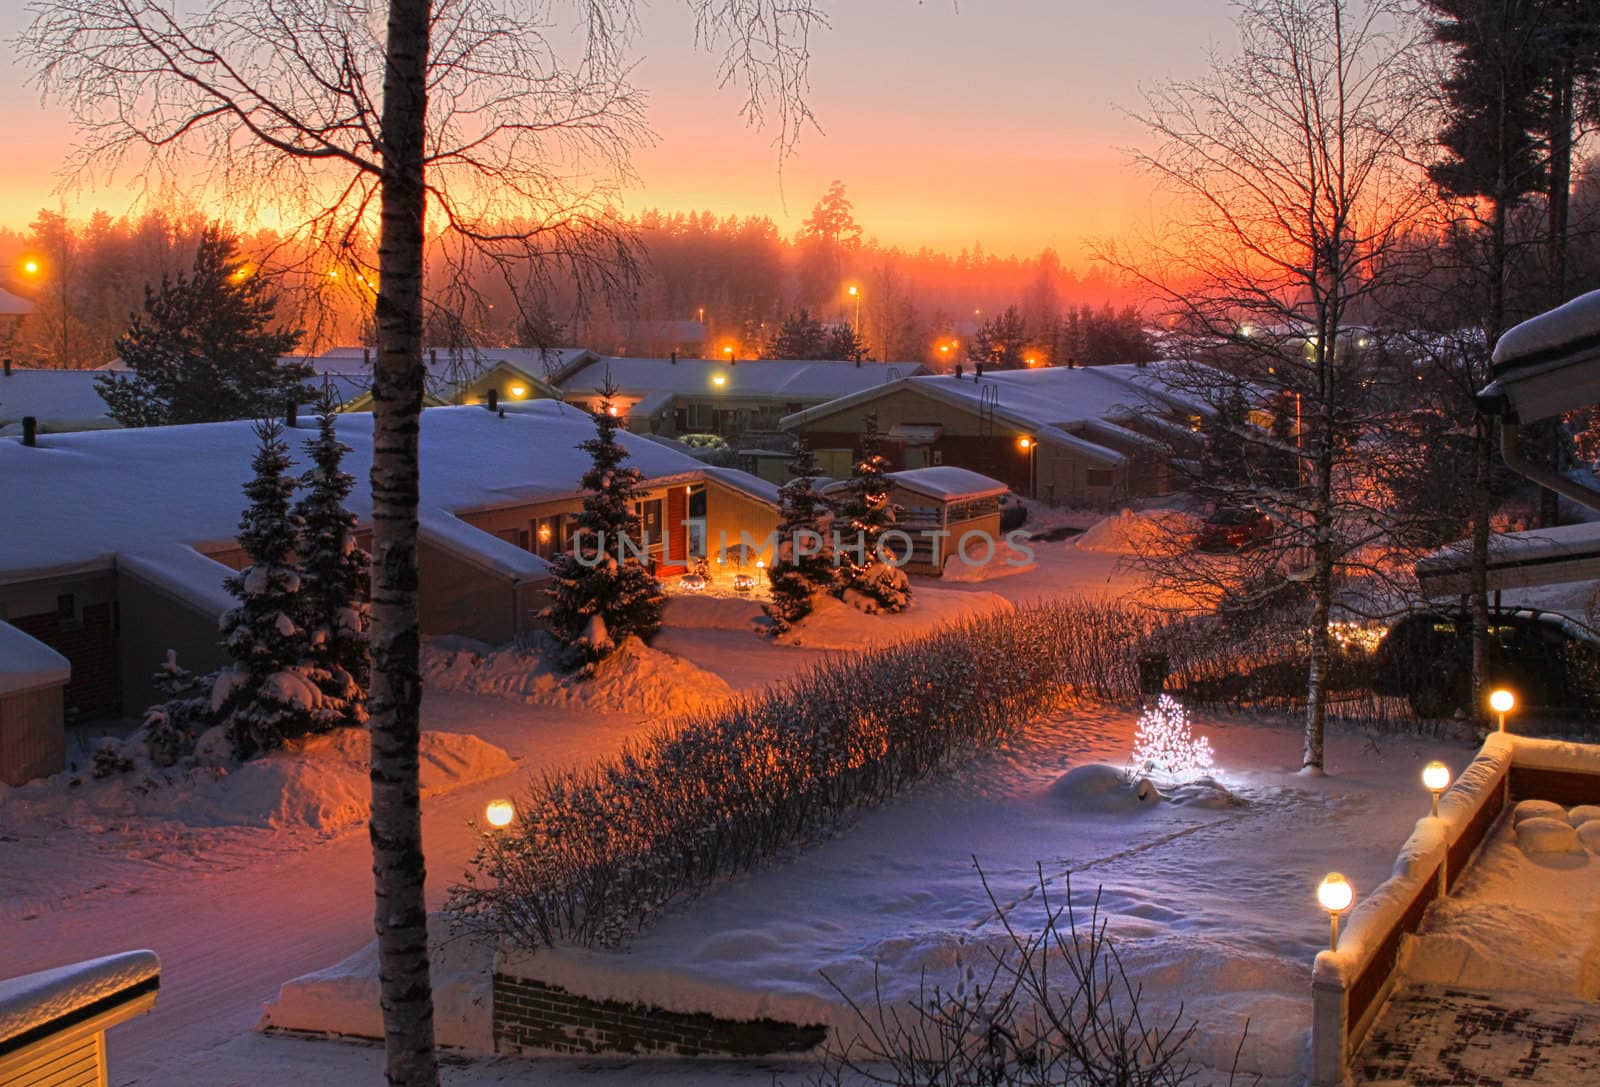 Snowy Christmas street evening view by anterovium